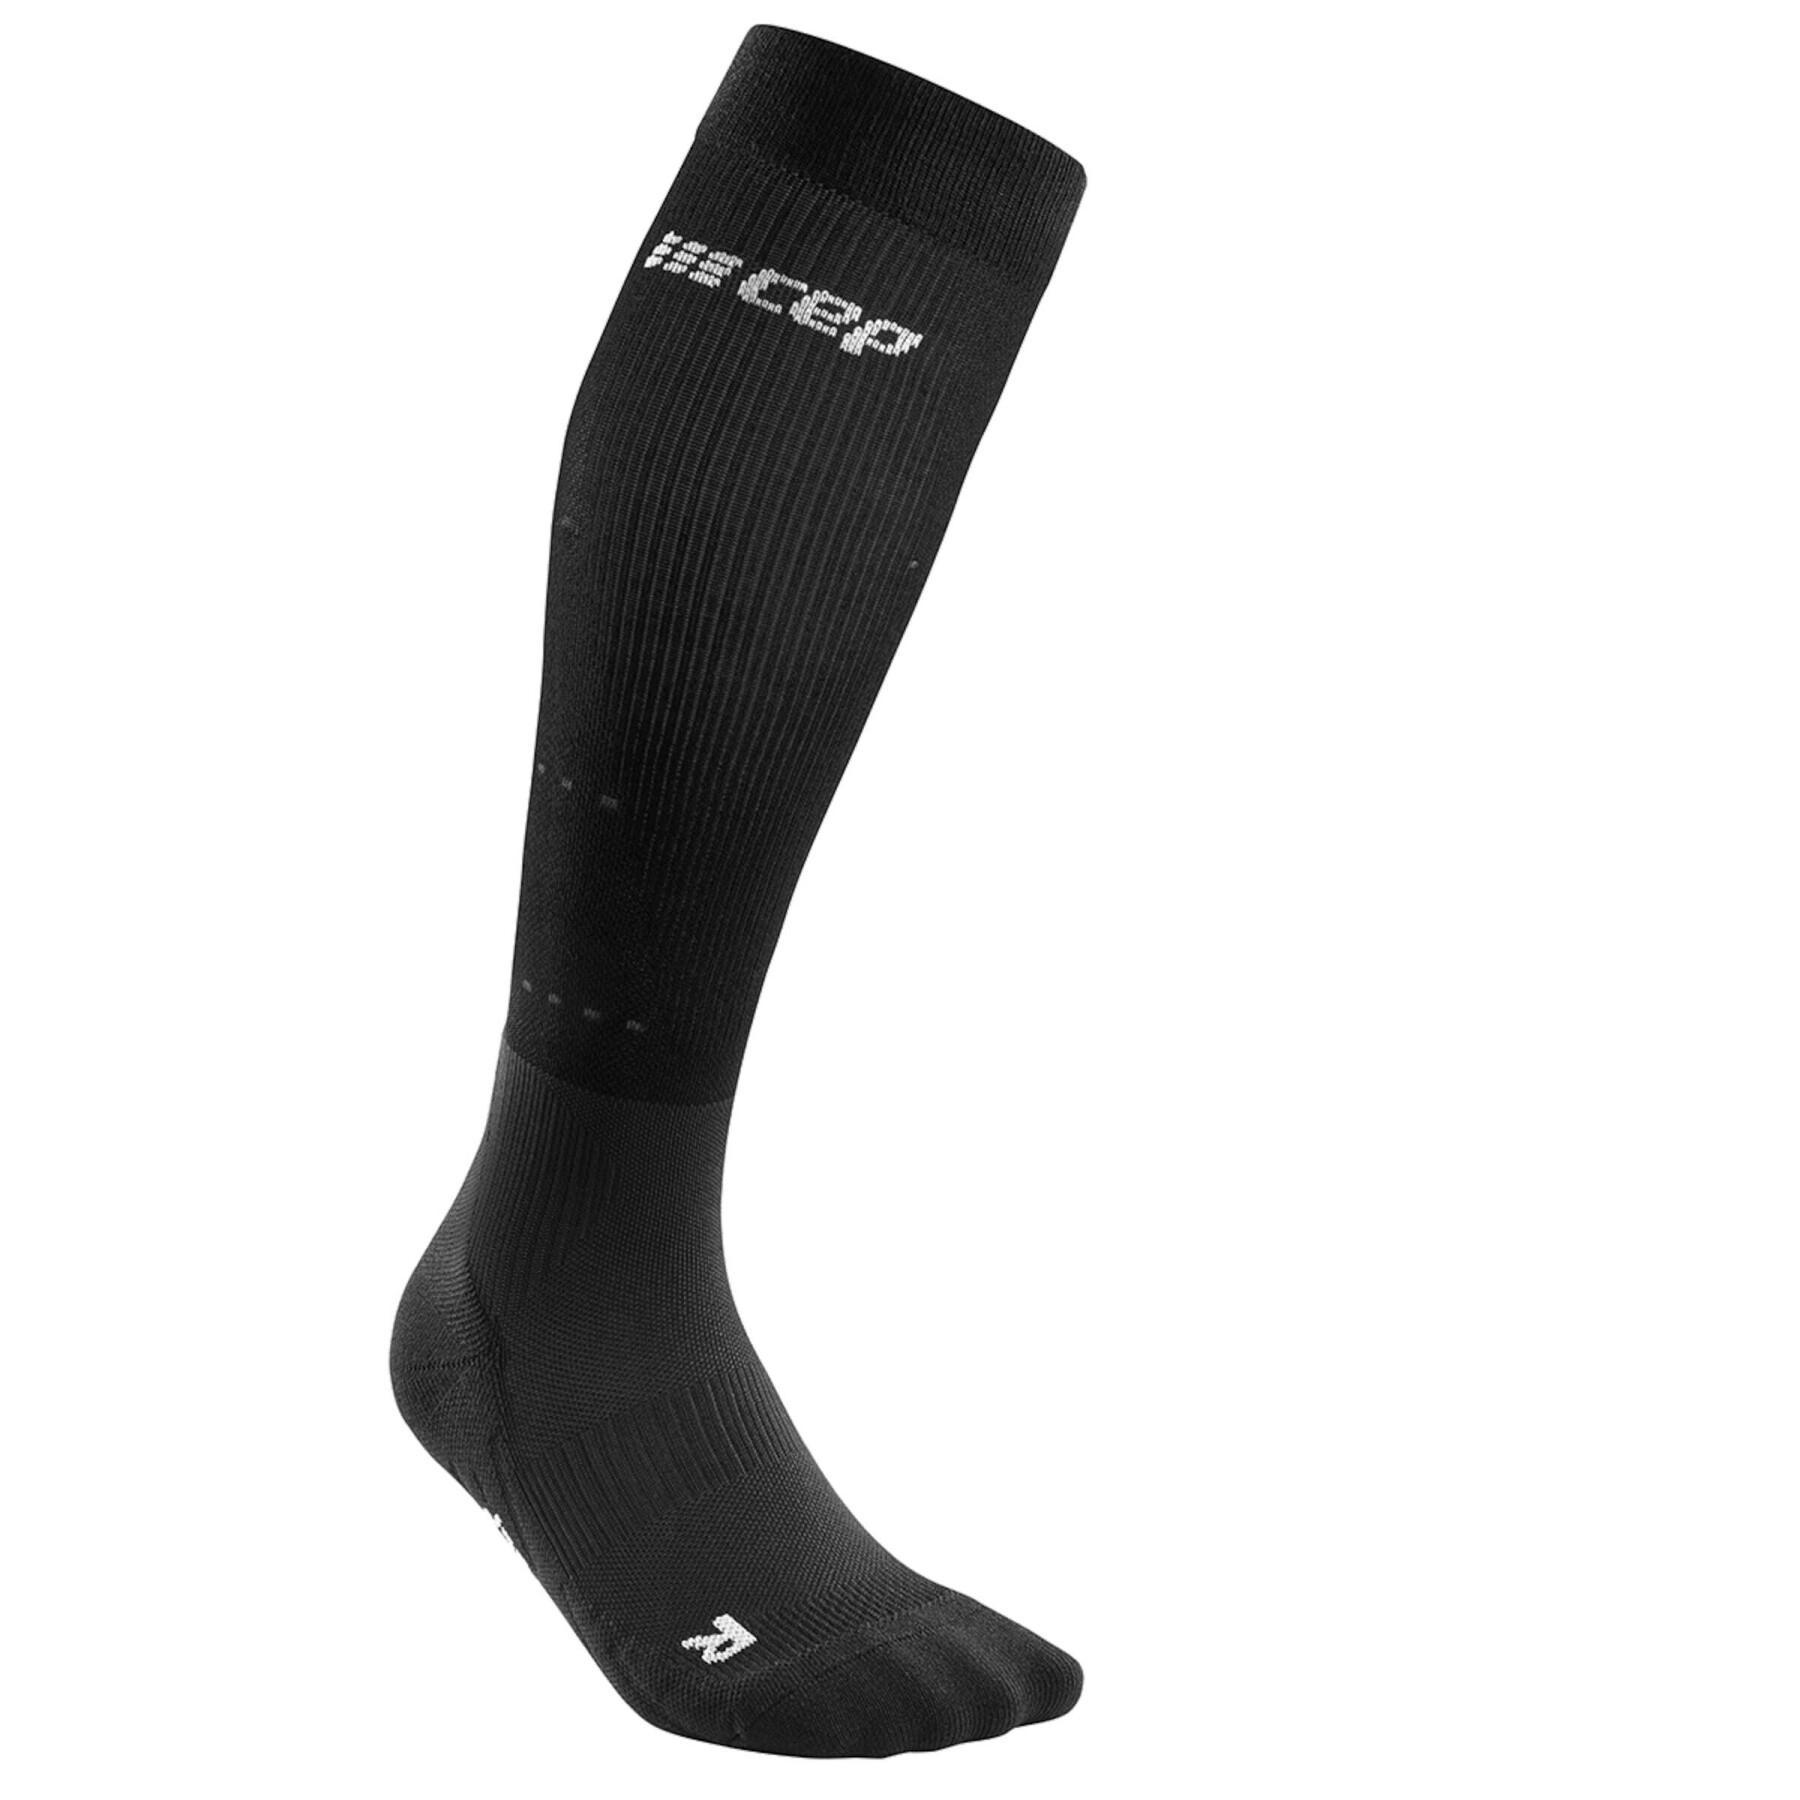 Recovery socks CEP Compression Infrared - Socks - Men's wear - Slocog wear